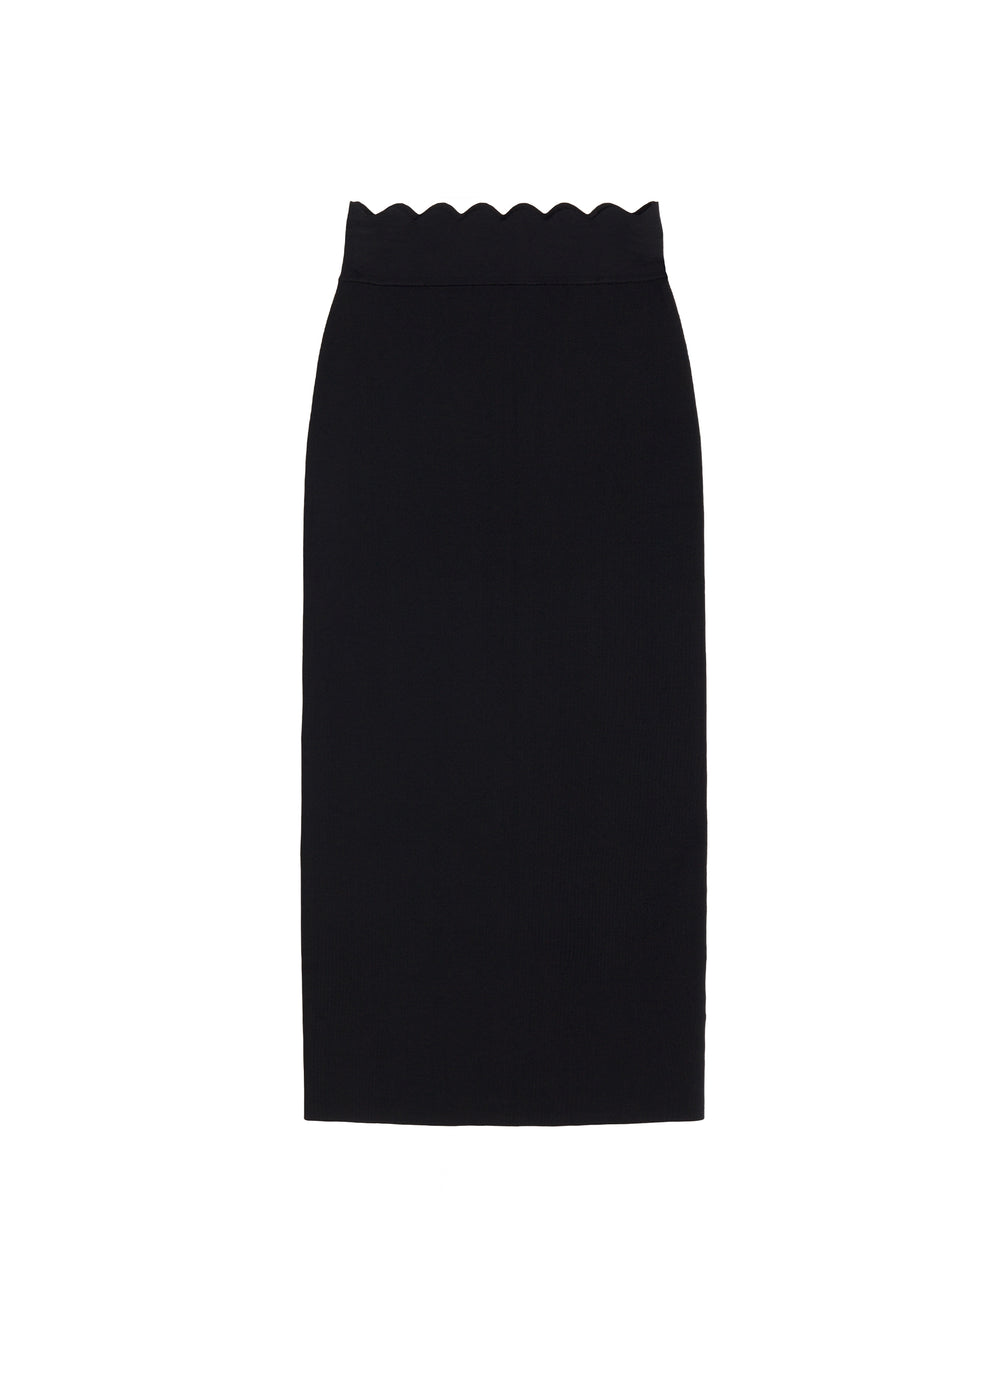 flatlay of black scalloped knit midi skirt